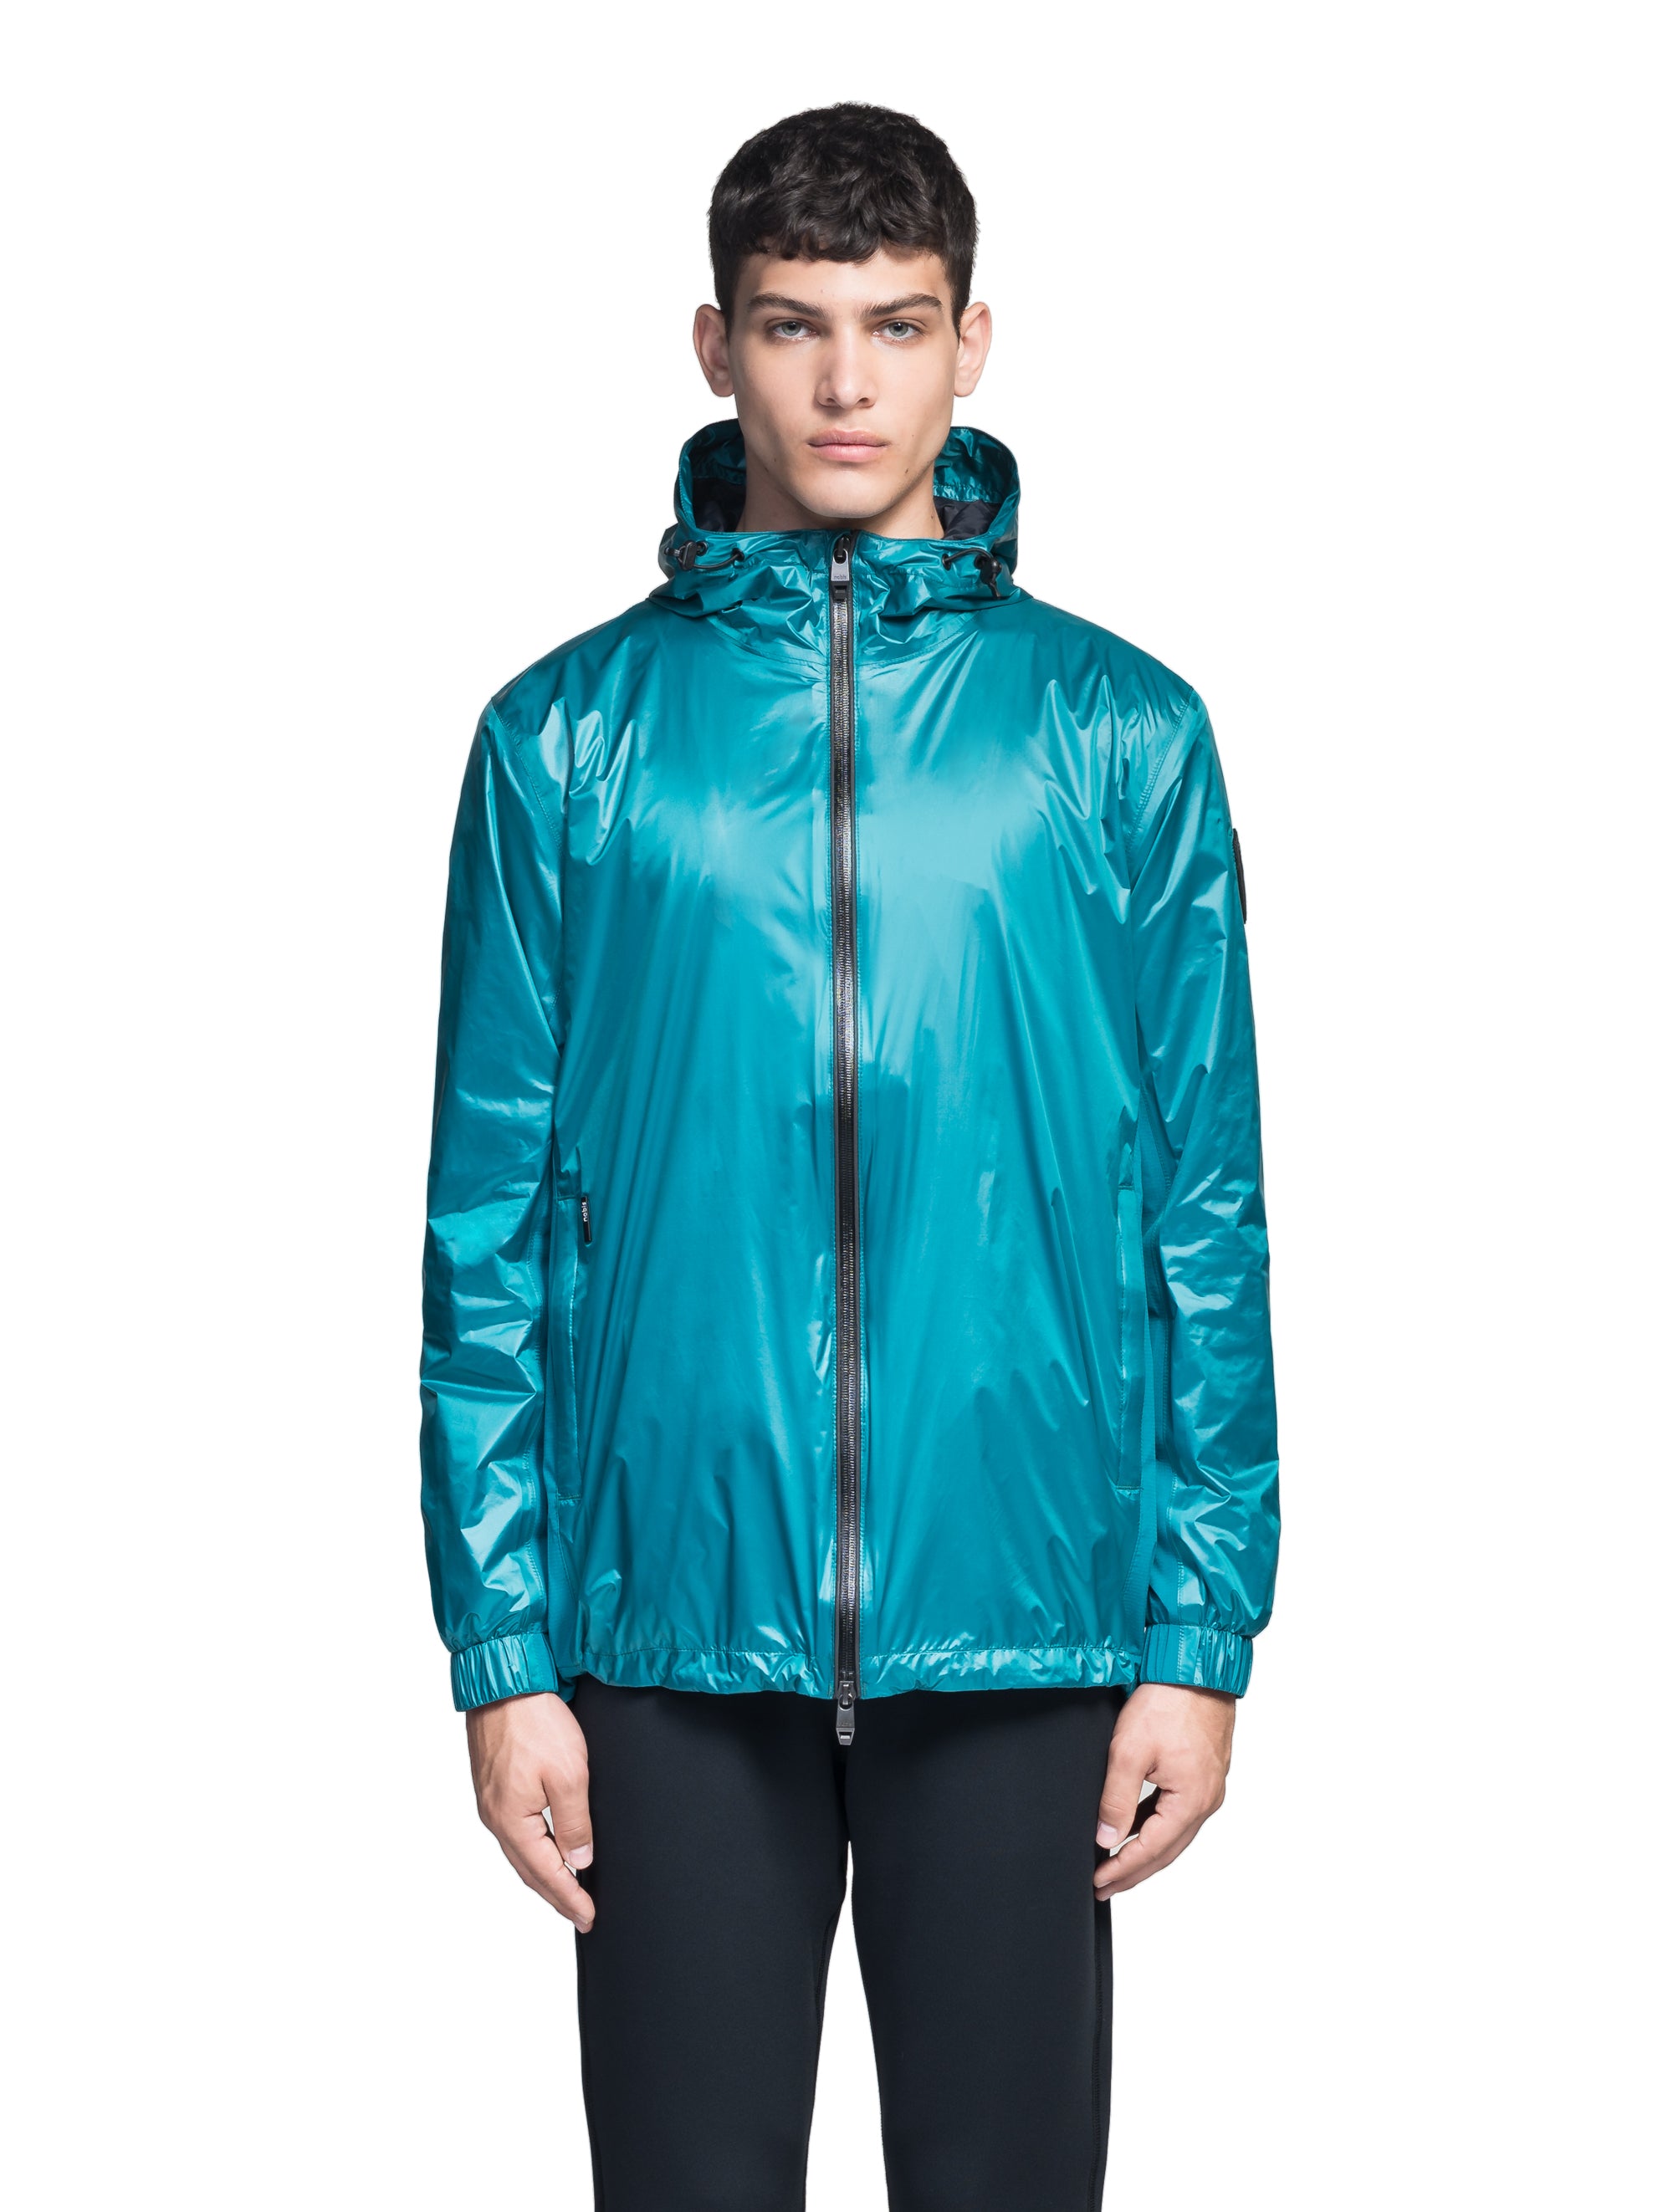 Stratus Men's Tailored Packable Rain Jacket